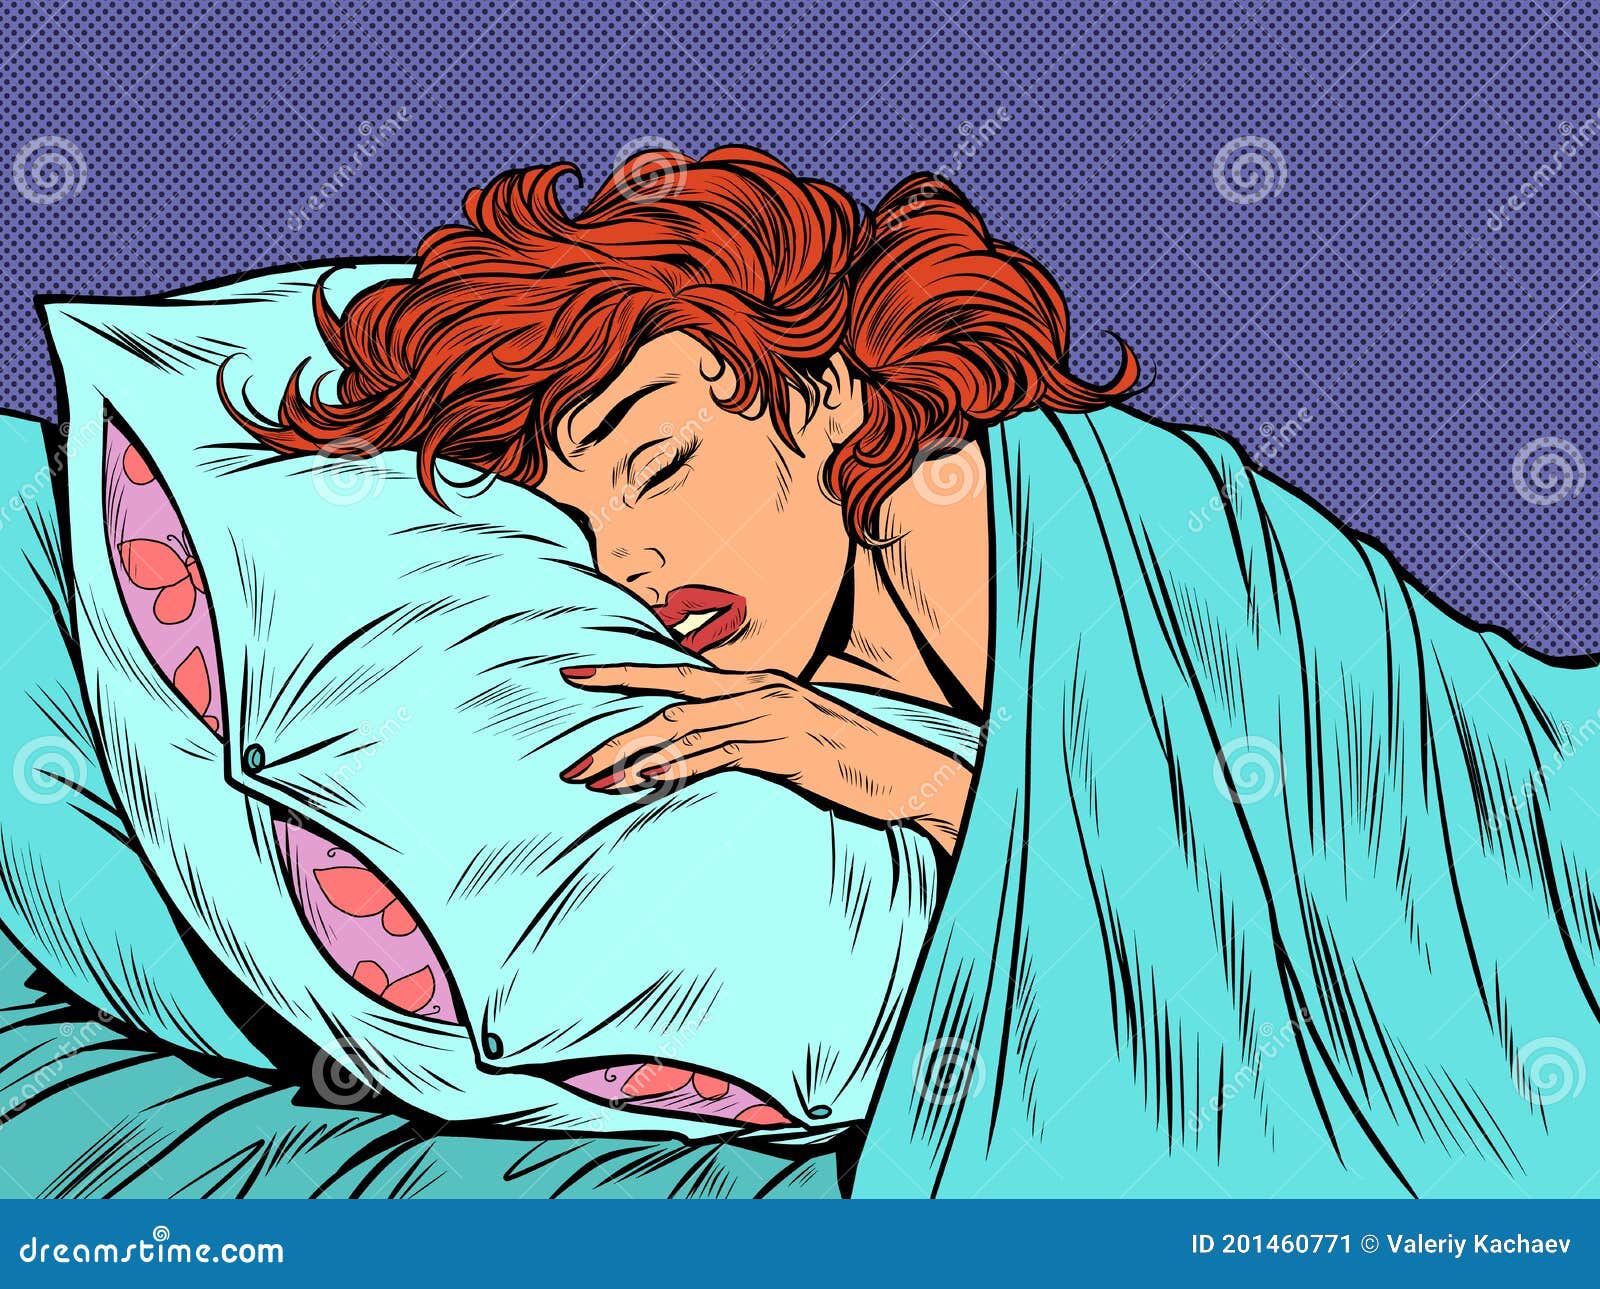 Woman Sleeps In Different Poses Healthy Night Sleep Sleeping Pose And Female Character Sleep